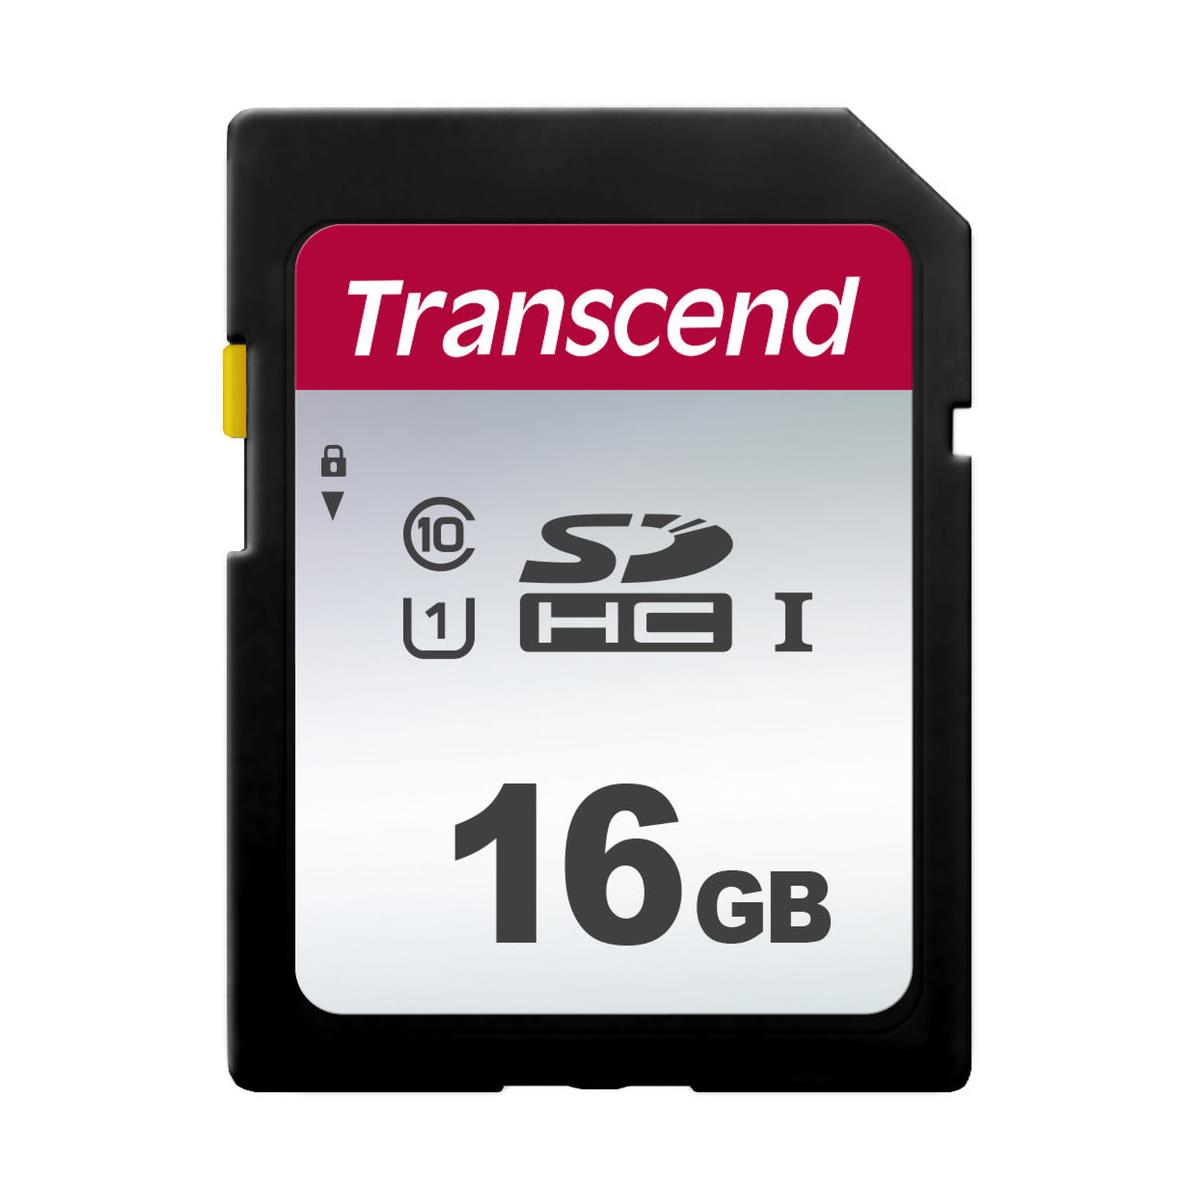 

Transcend 16GB 300S UHS-I U1 SDHC Memory Card